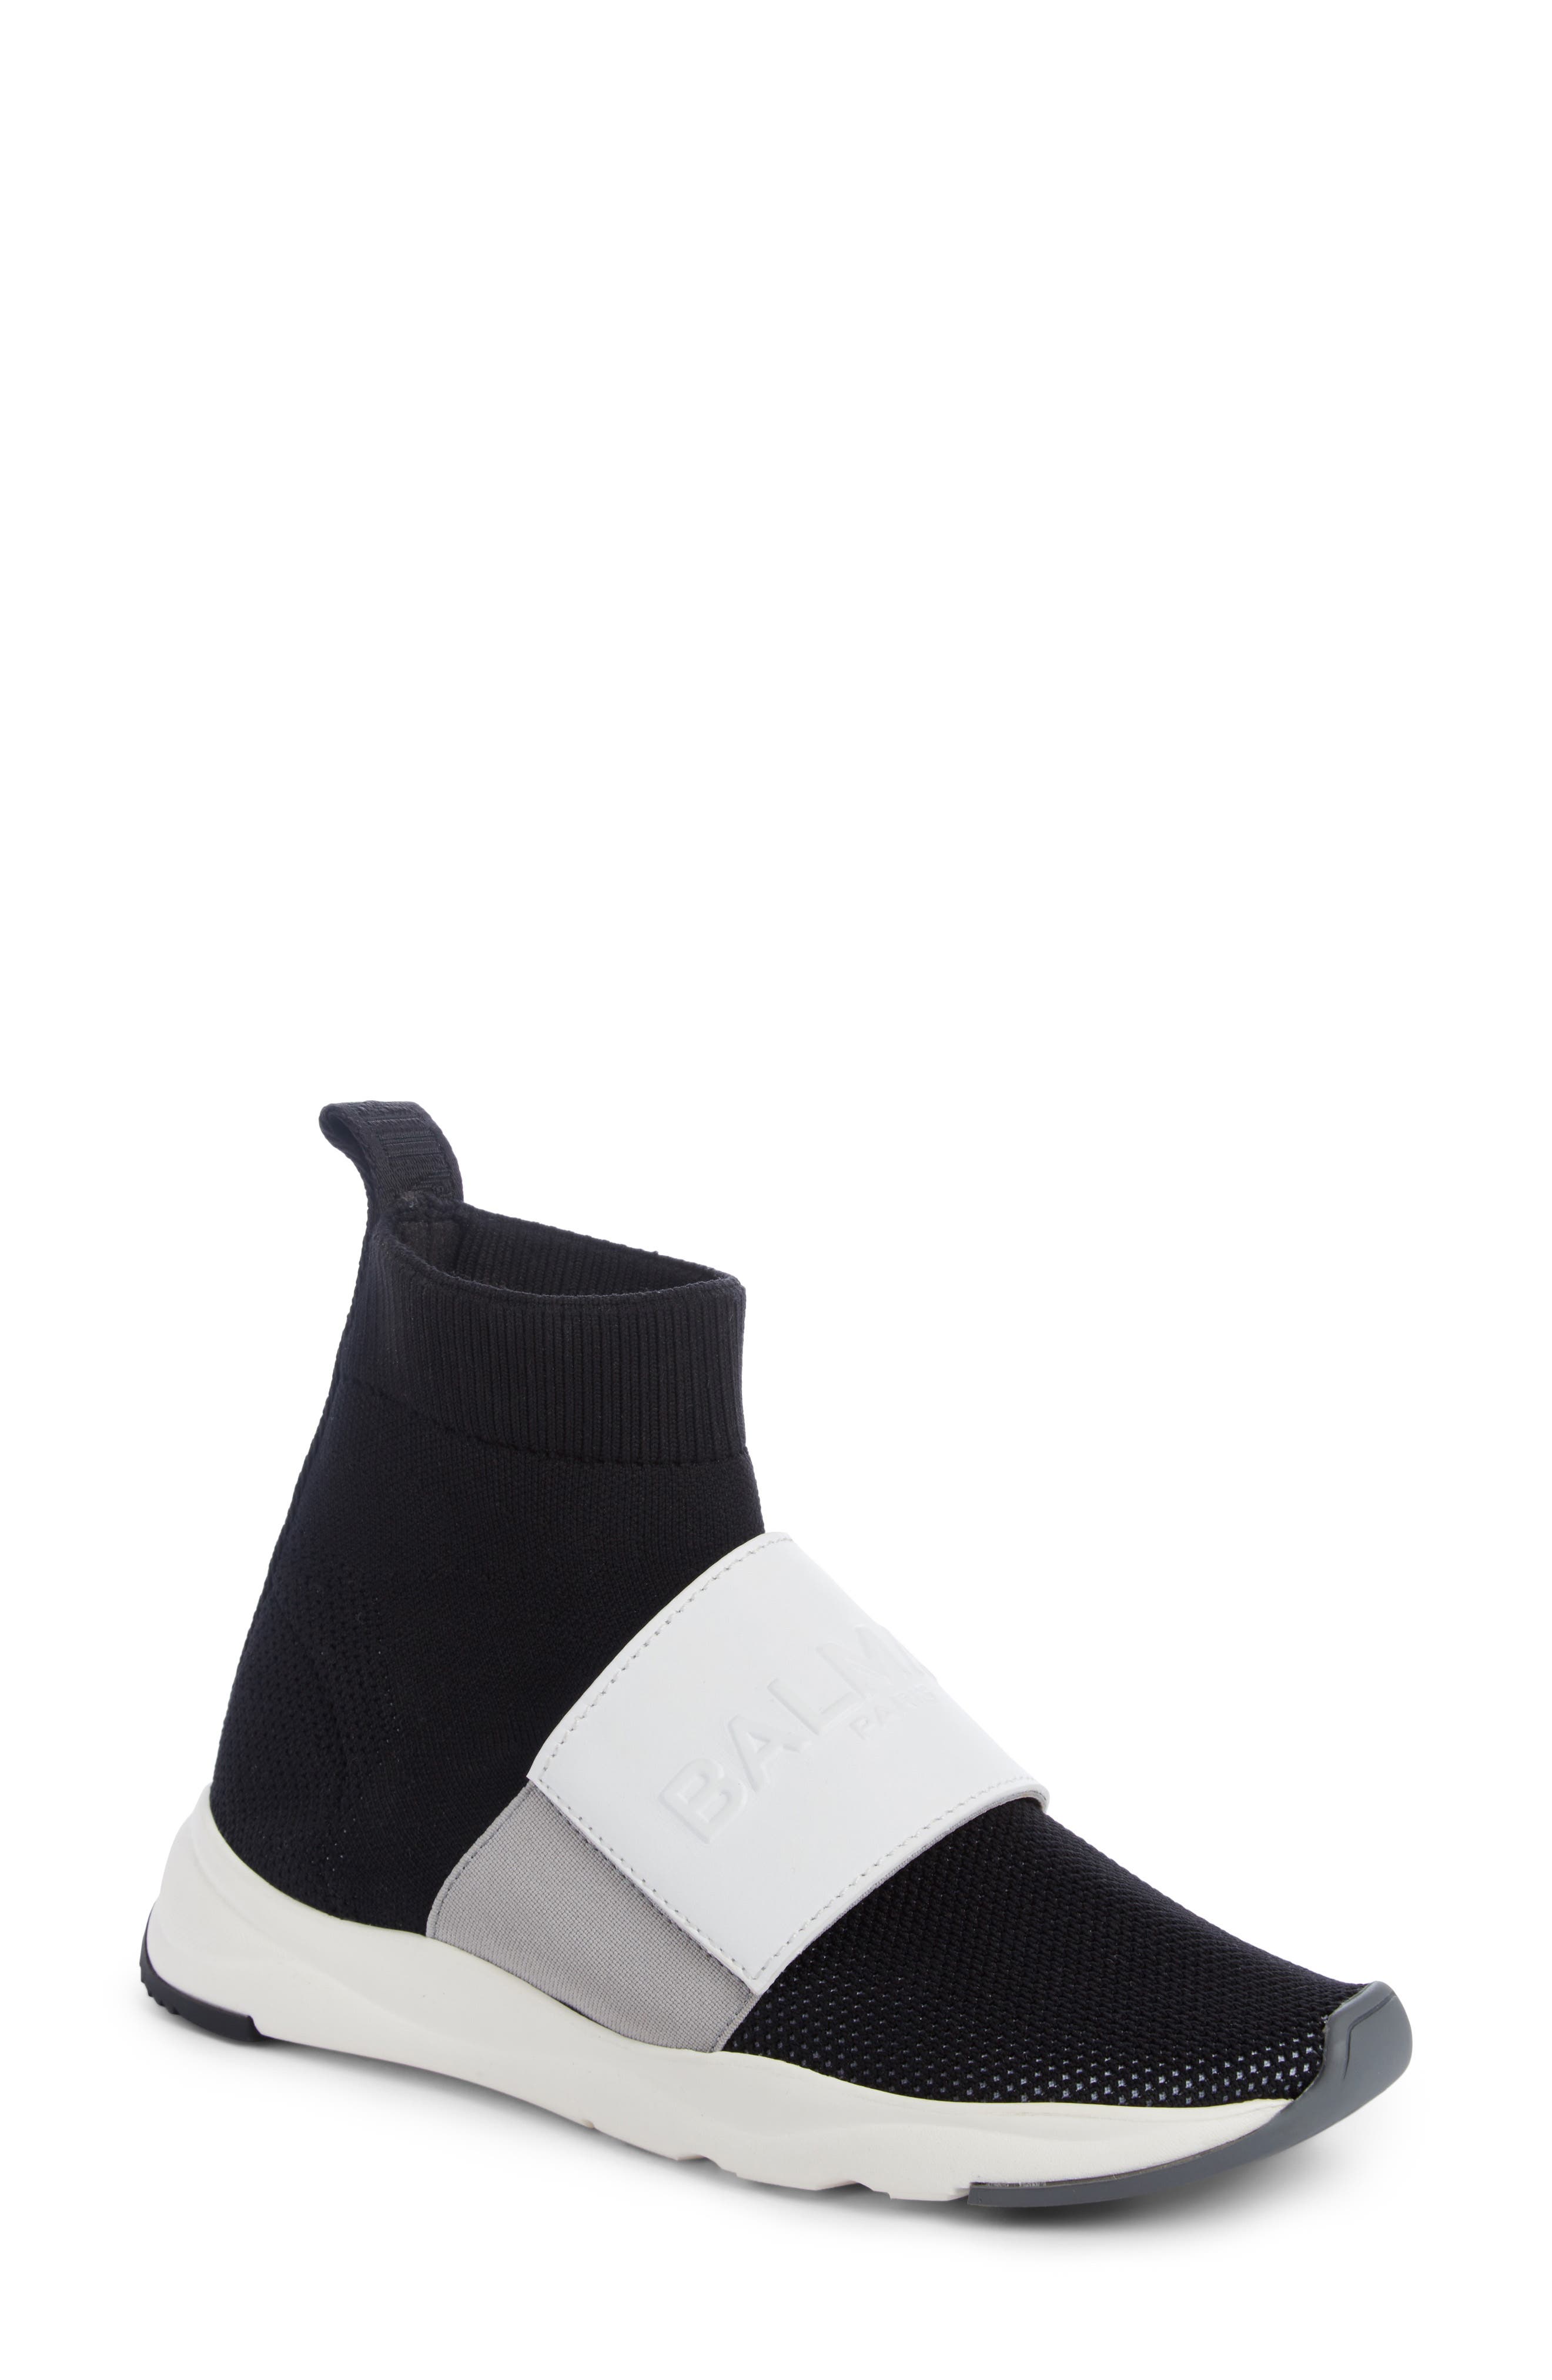 balmain sock sneakers